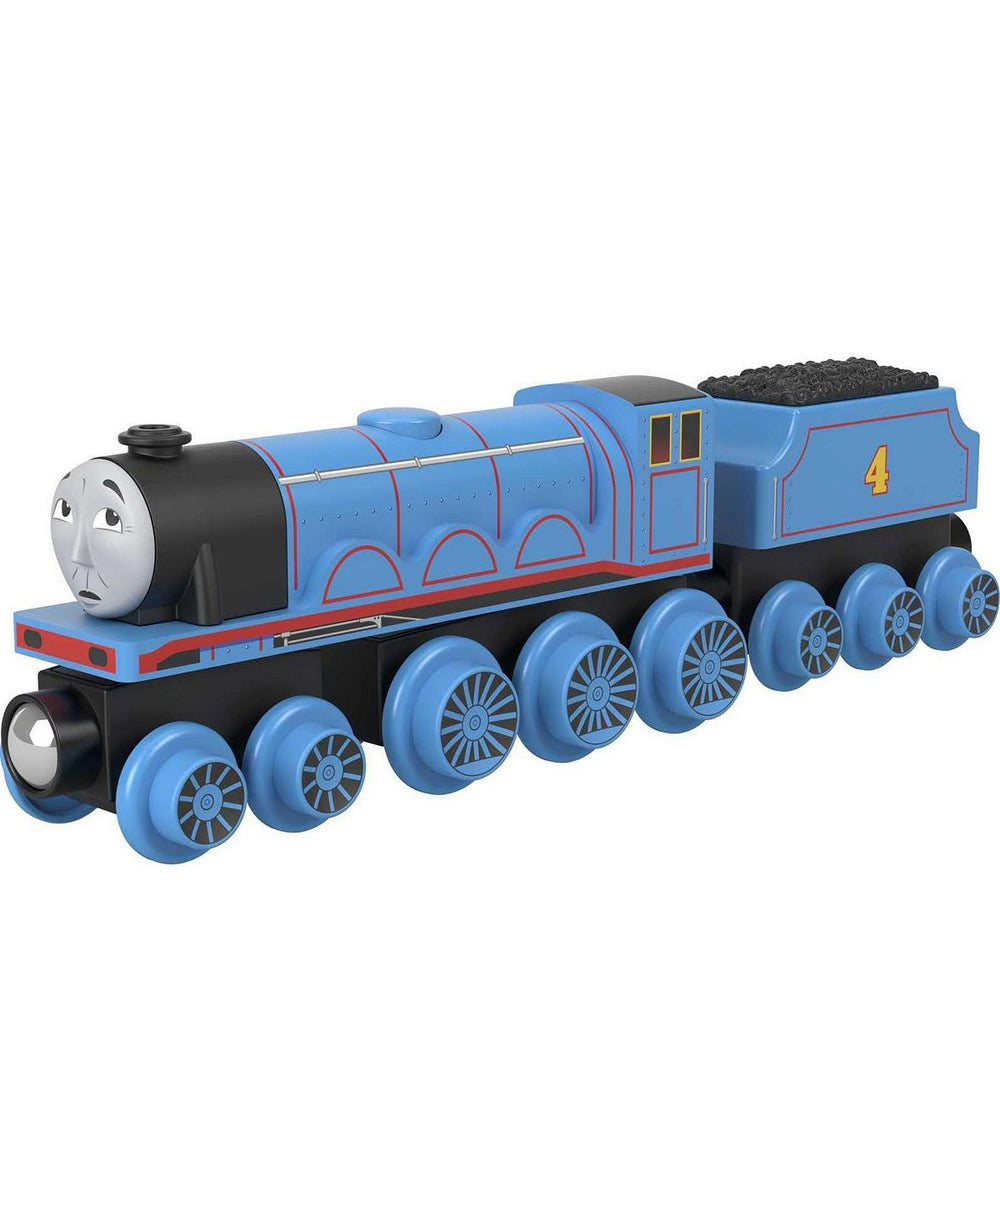 Fisher-Price Thomas & Friends Wooden Railway Gordon Engine with Coal-Car